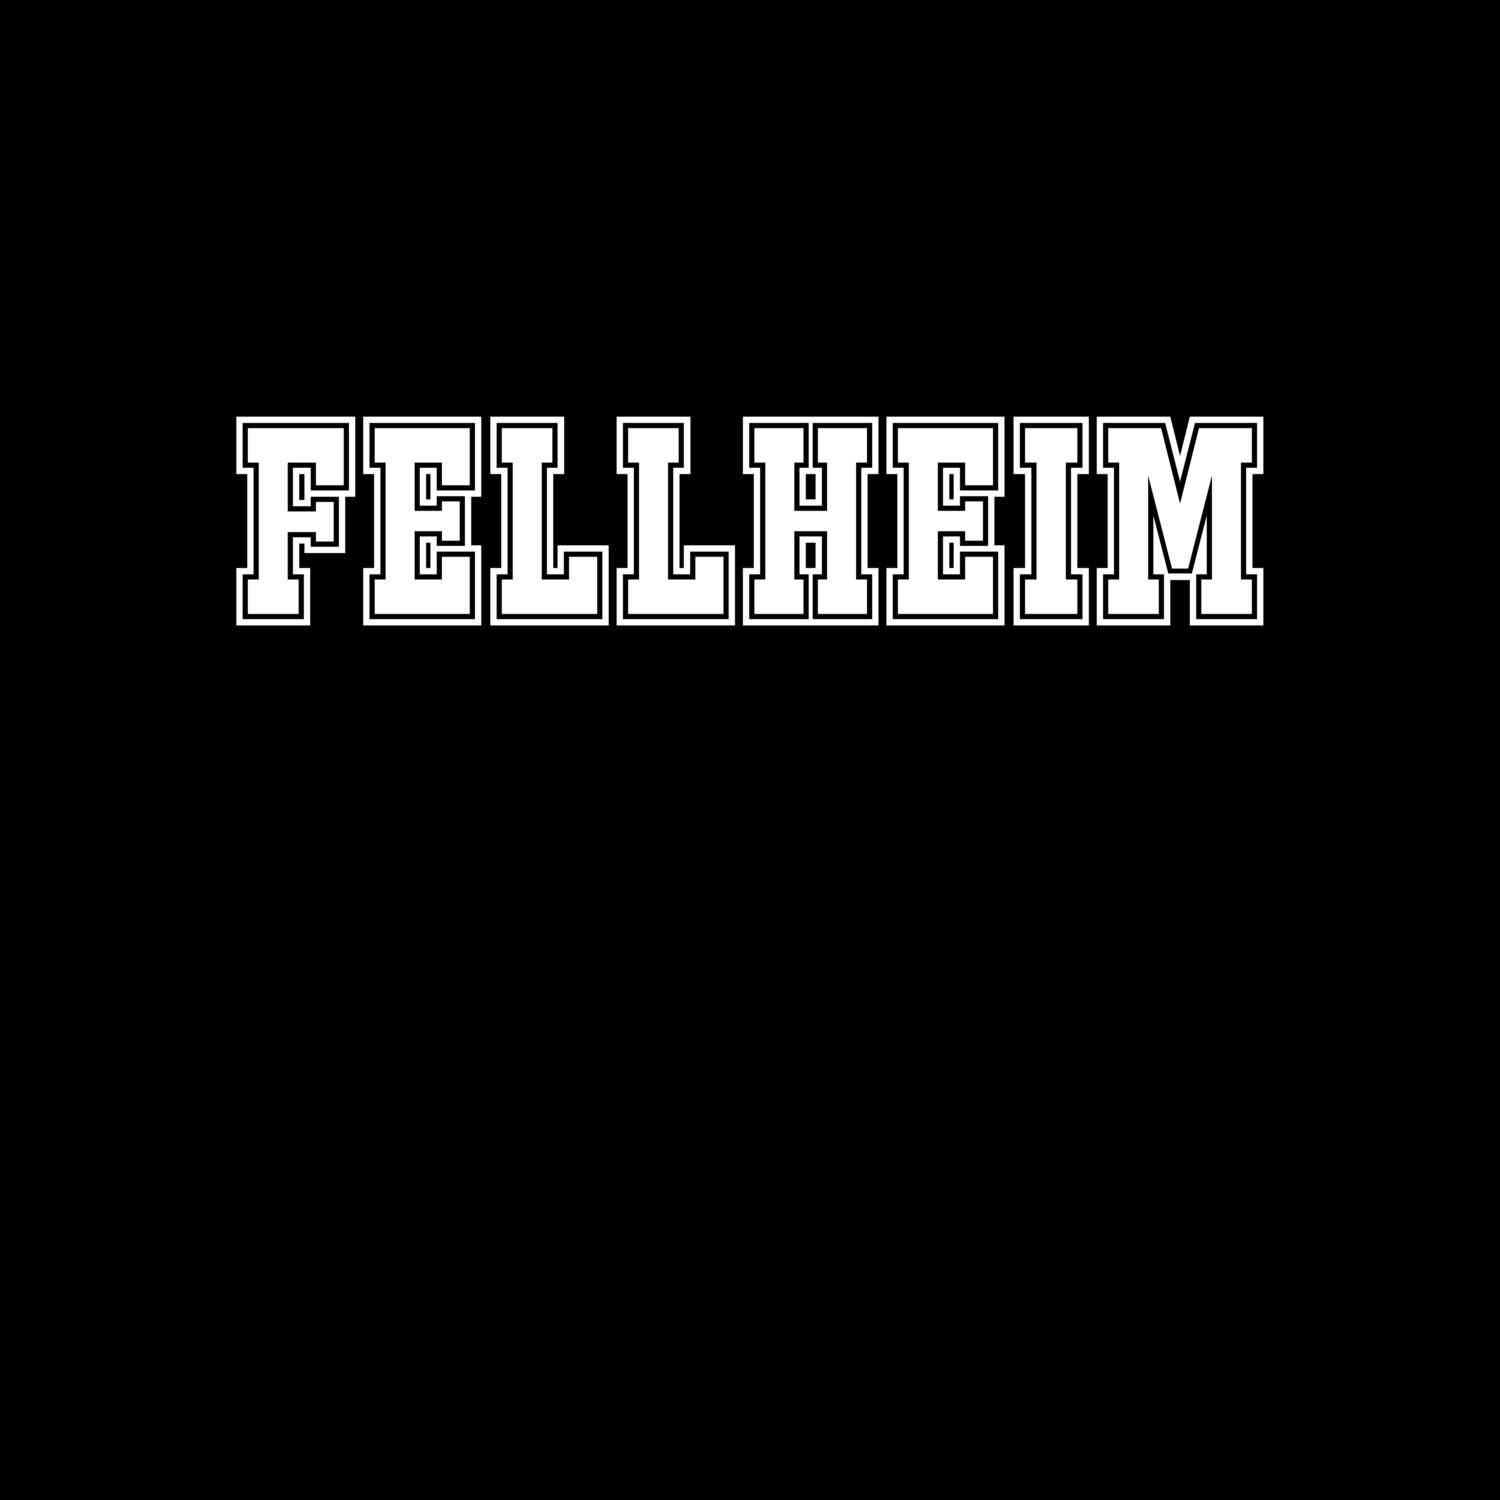 Fellheim T-Shirt »Classic«